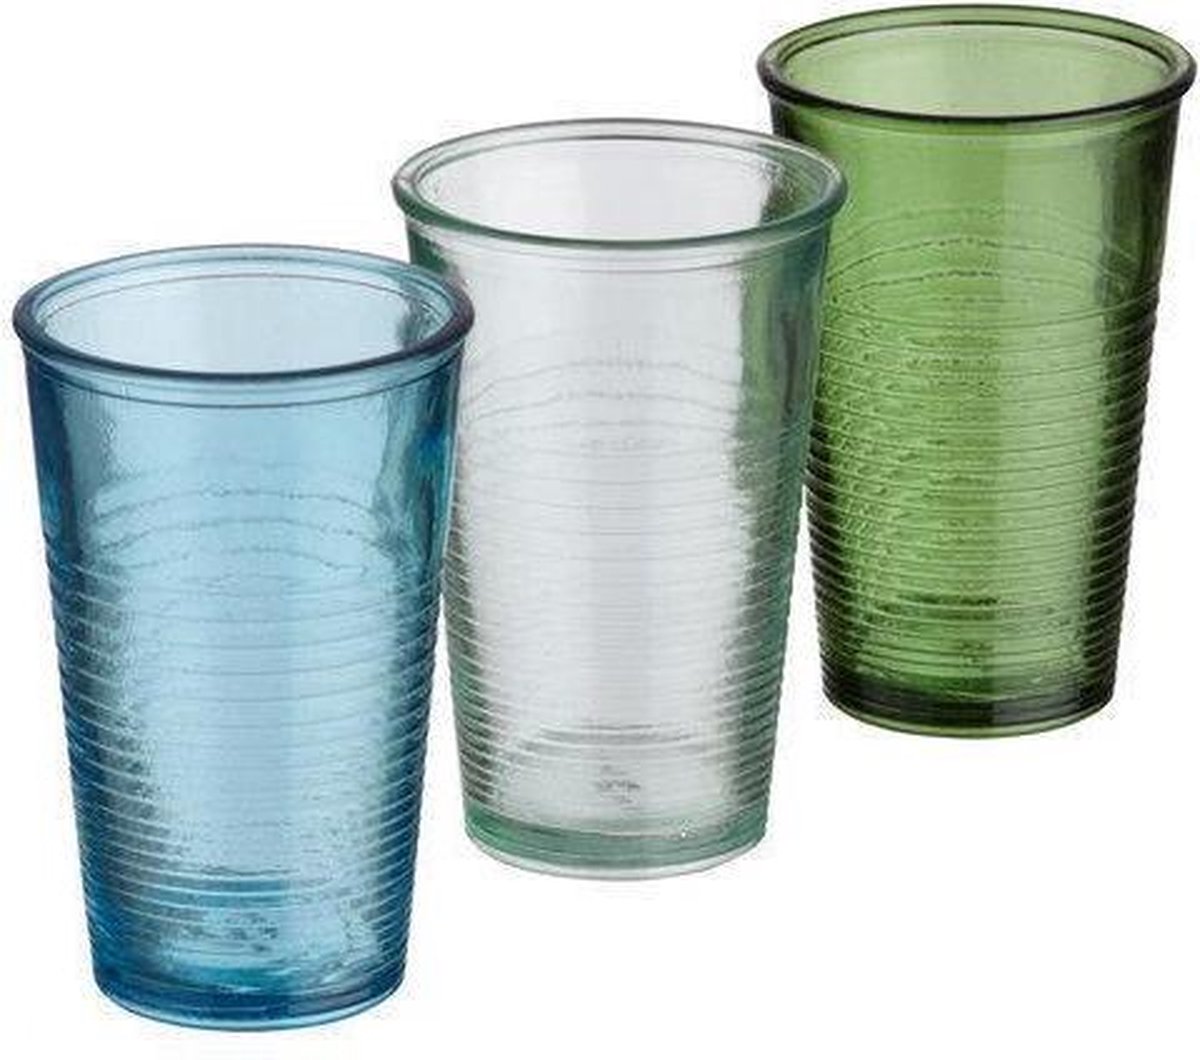 Jamie Oliver - Vintage glazen 3 stuks Gekleurd transparant - Recycled glas